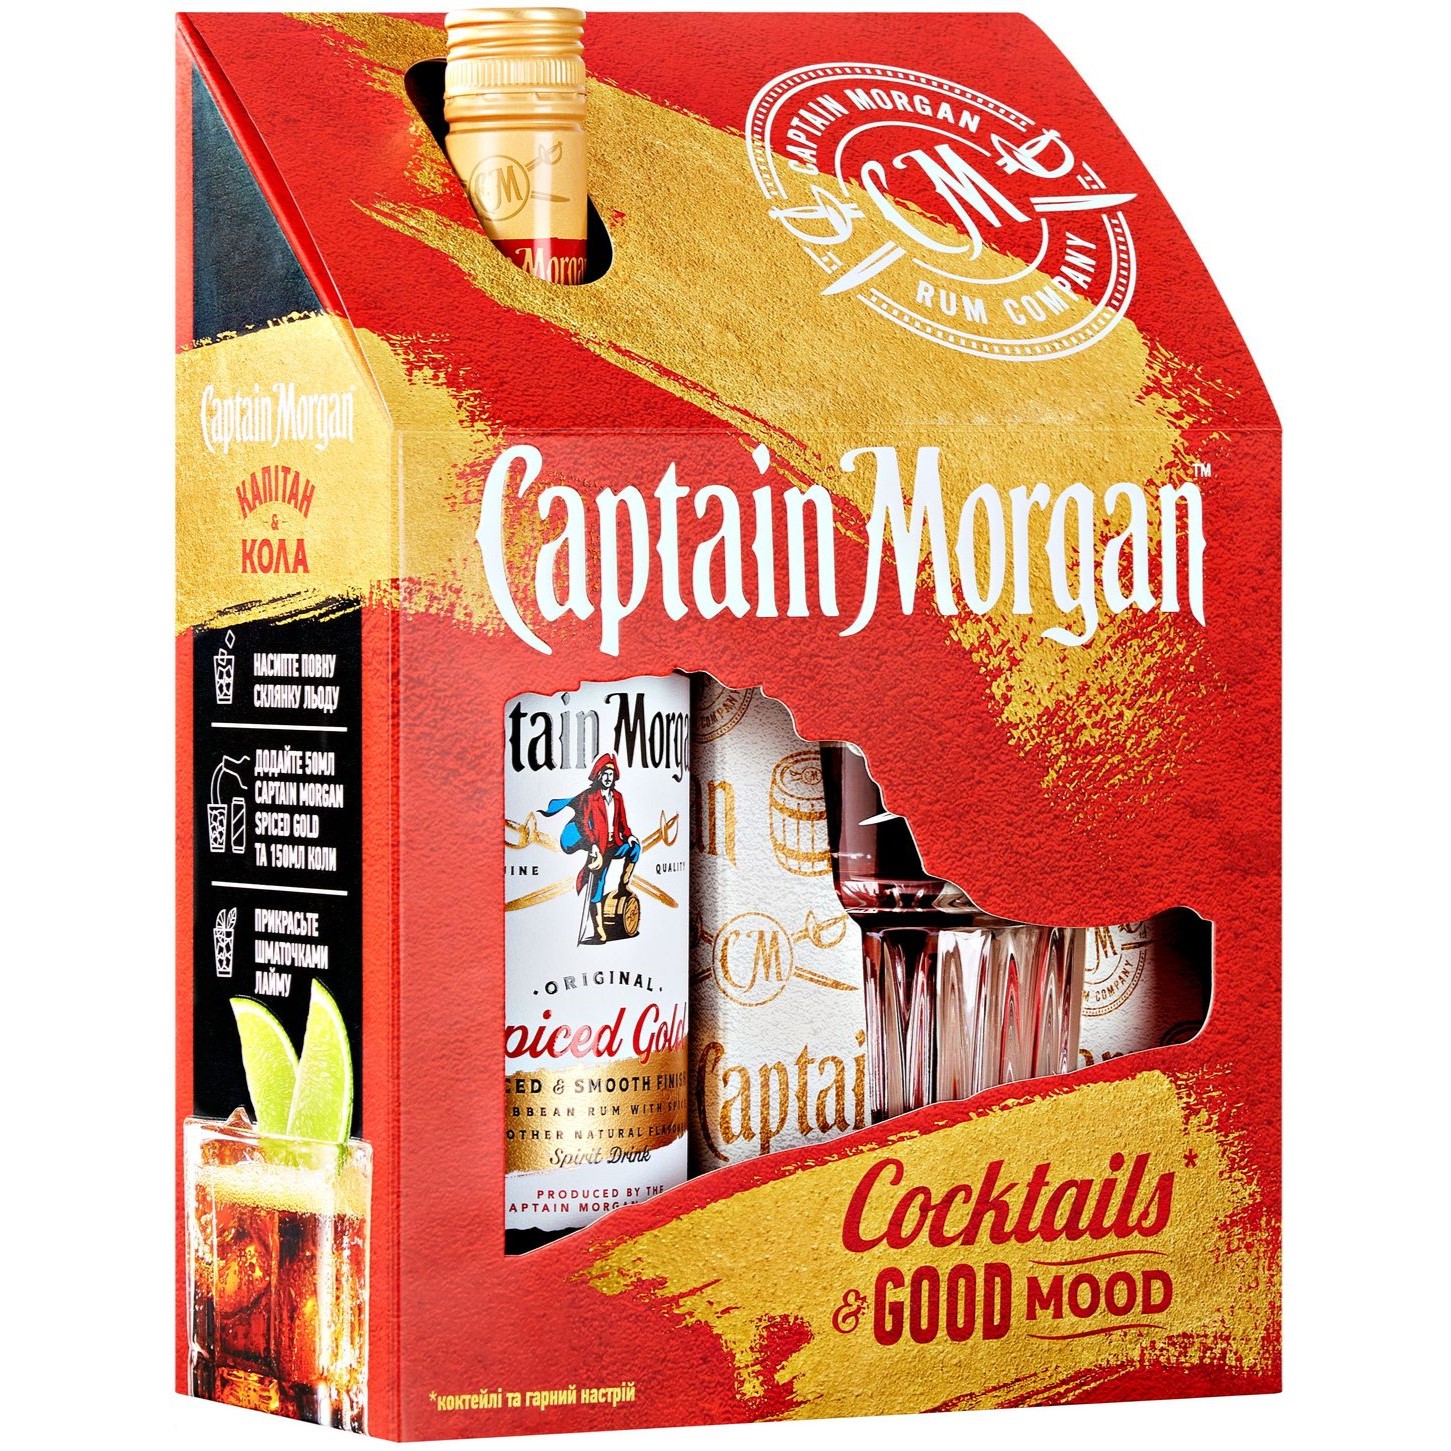 Ромовый напиток Captain Morgan Spiced Gold, 35%, 0,7 л + стакан - фото 4